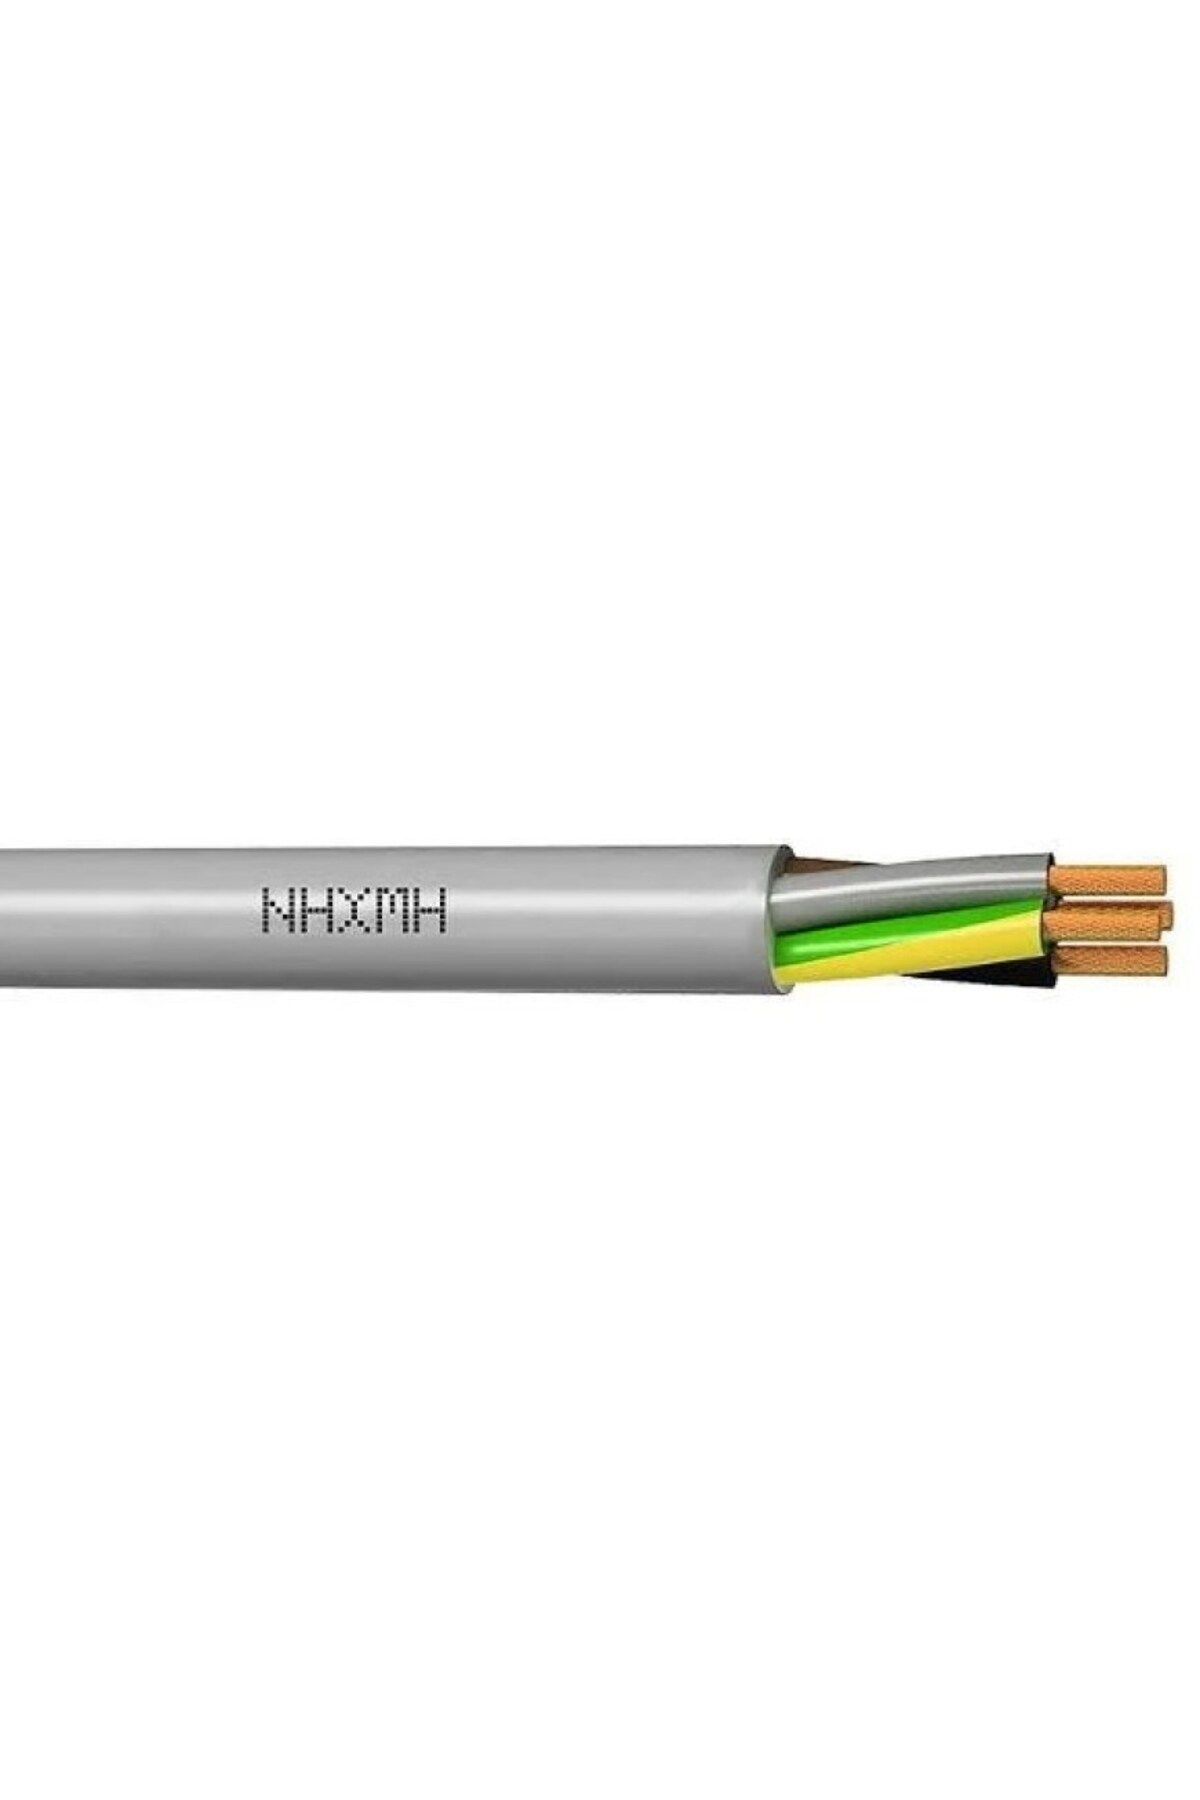 ÖZNUR 80 Metre 5x2.5 NHXMH Halogen Free Kablo Öznur Kablo